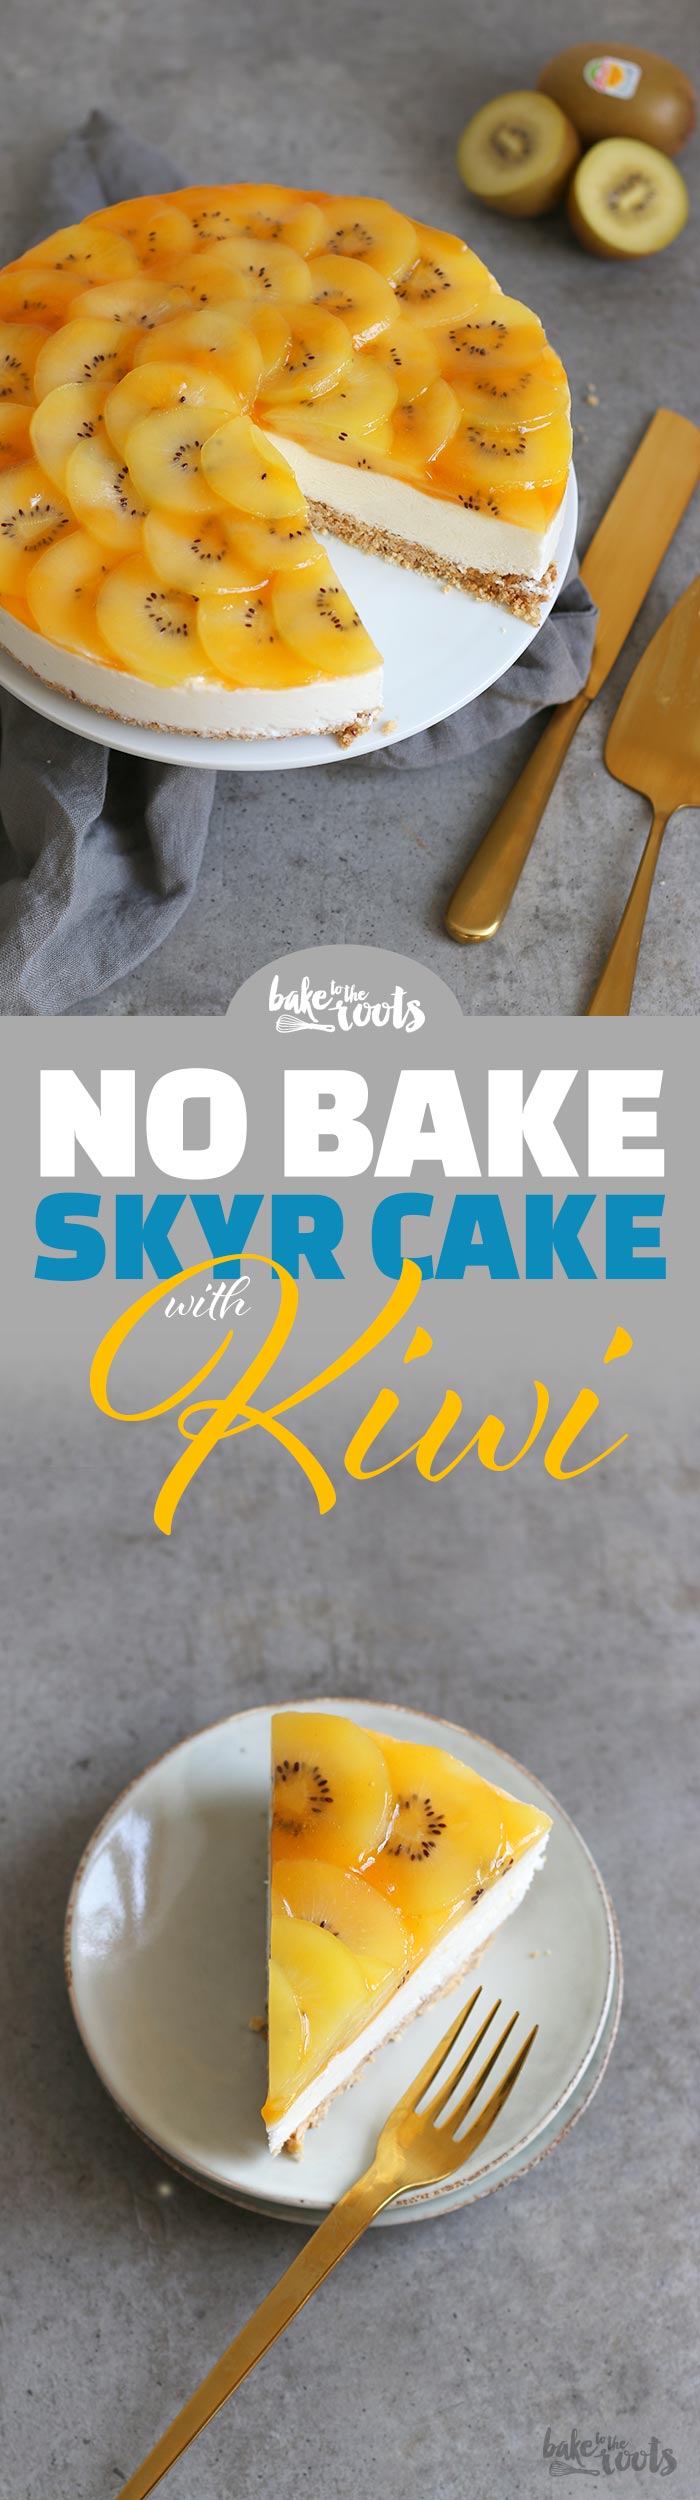 No Bake Skyr Cake mit Kiwi | Bake to the roots